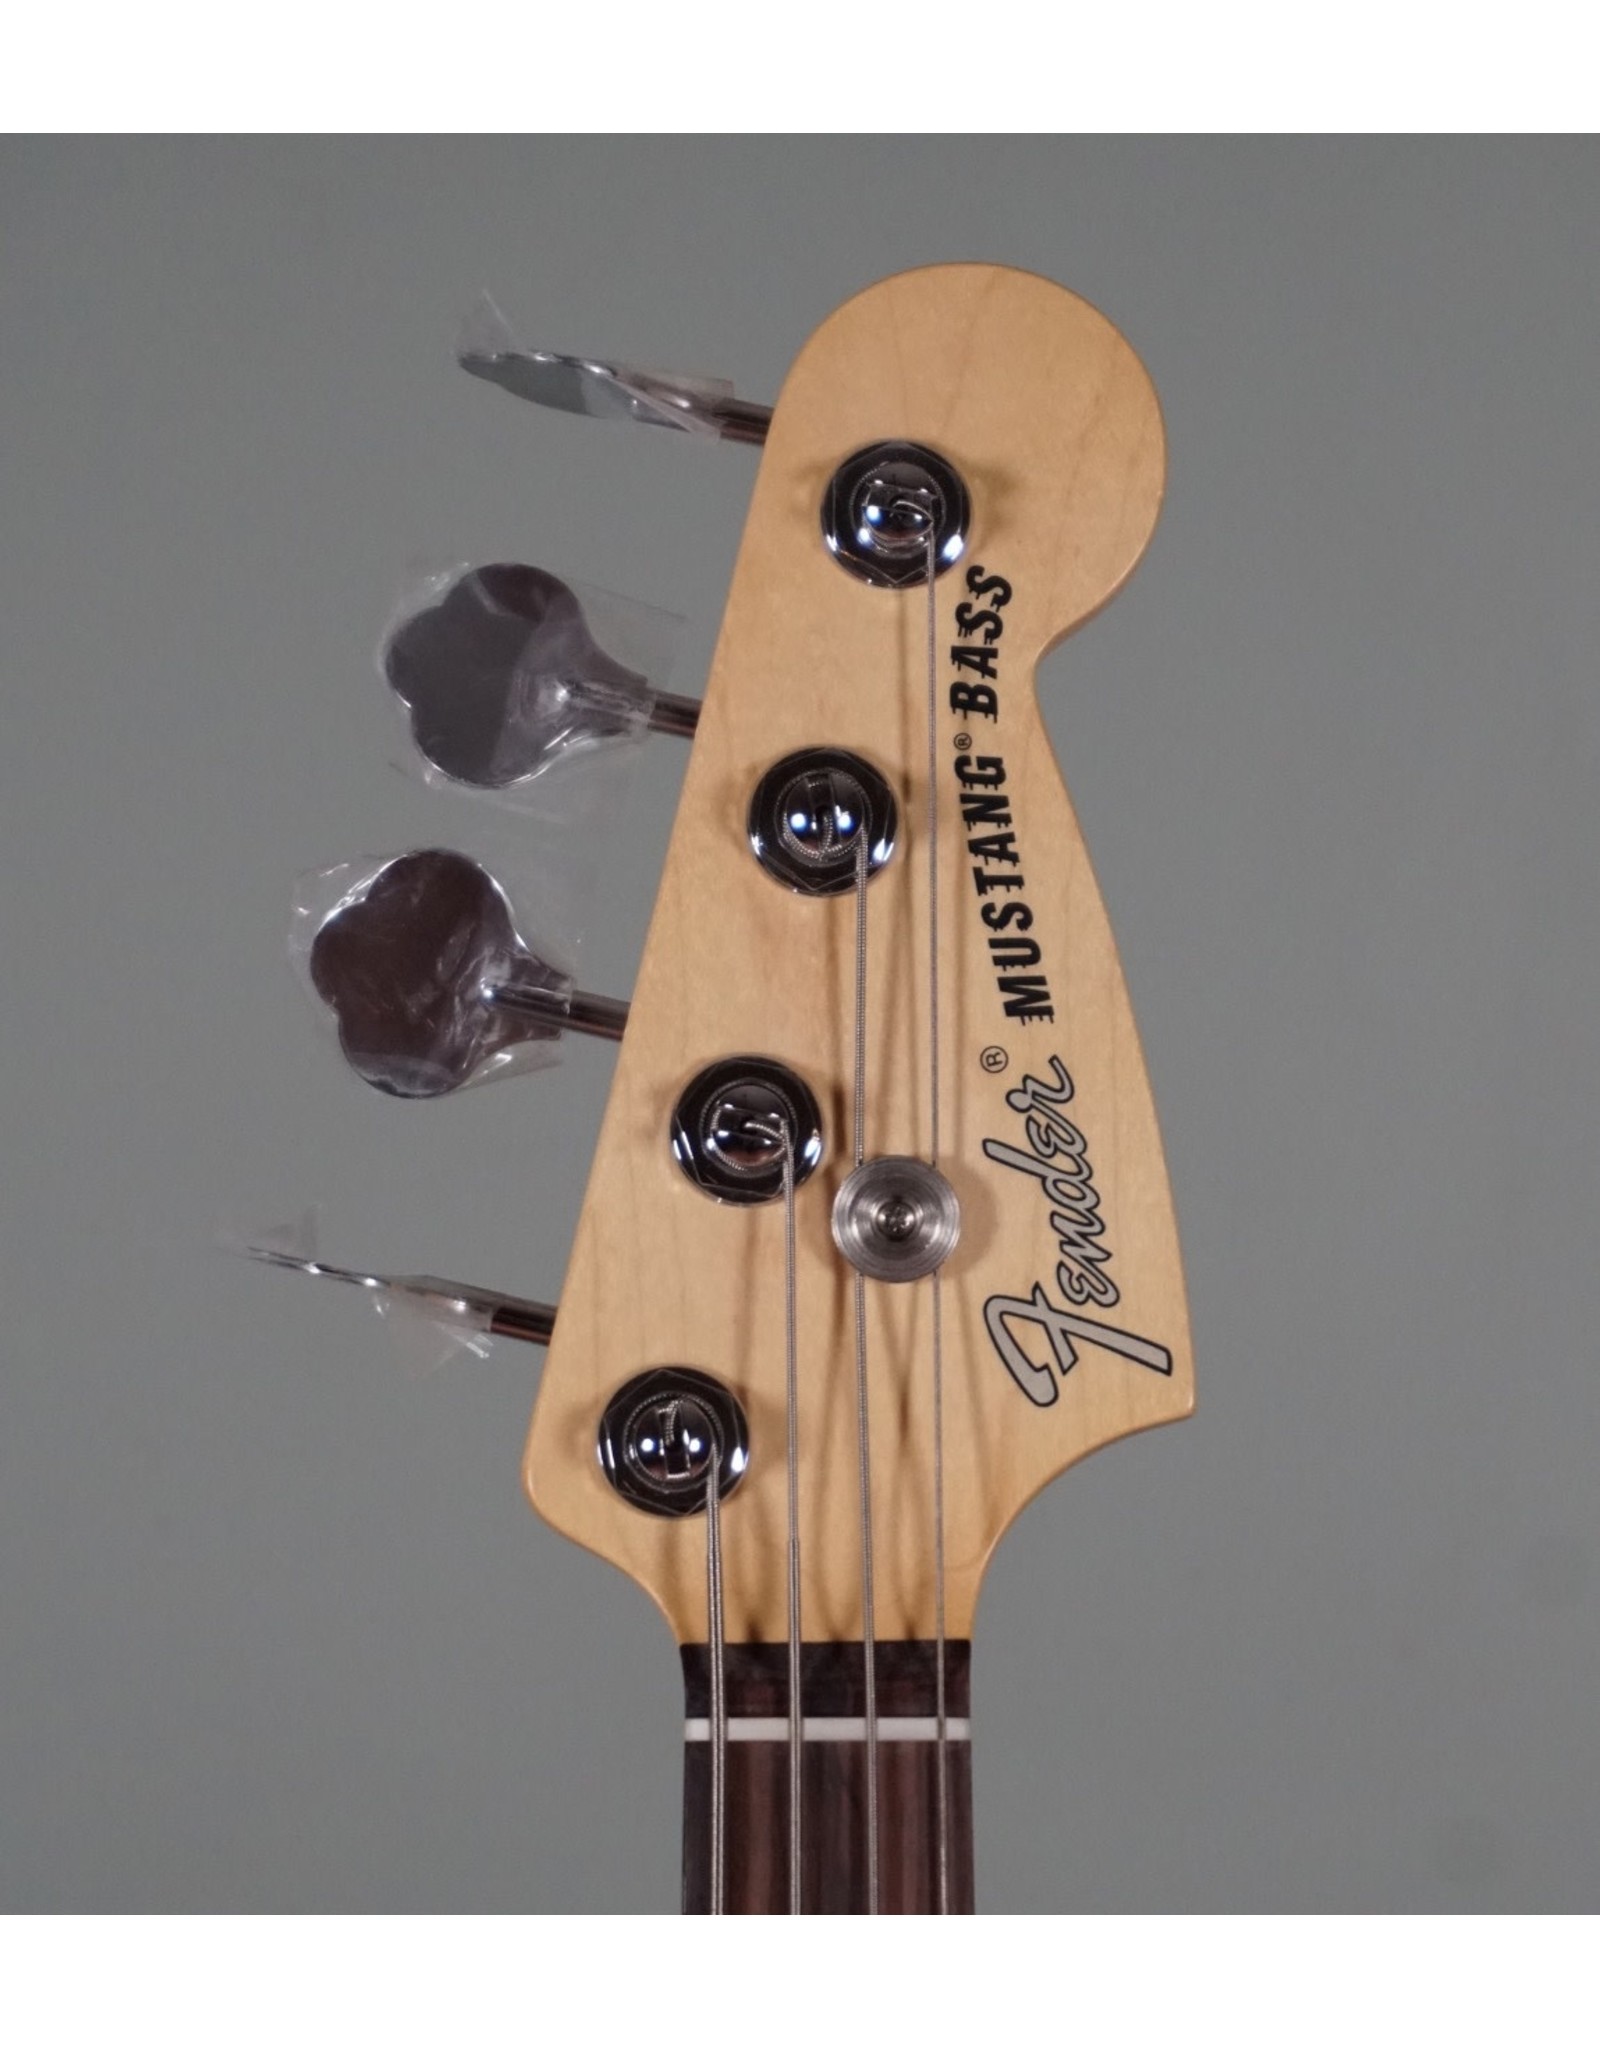 Fender Fender American Performer Mustang Bass, Satin Surf Green w/ Deluxe Gig Bag